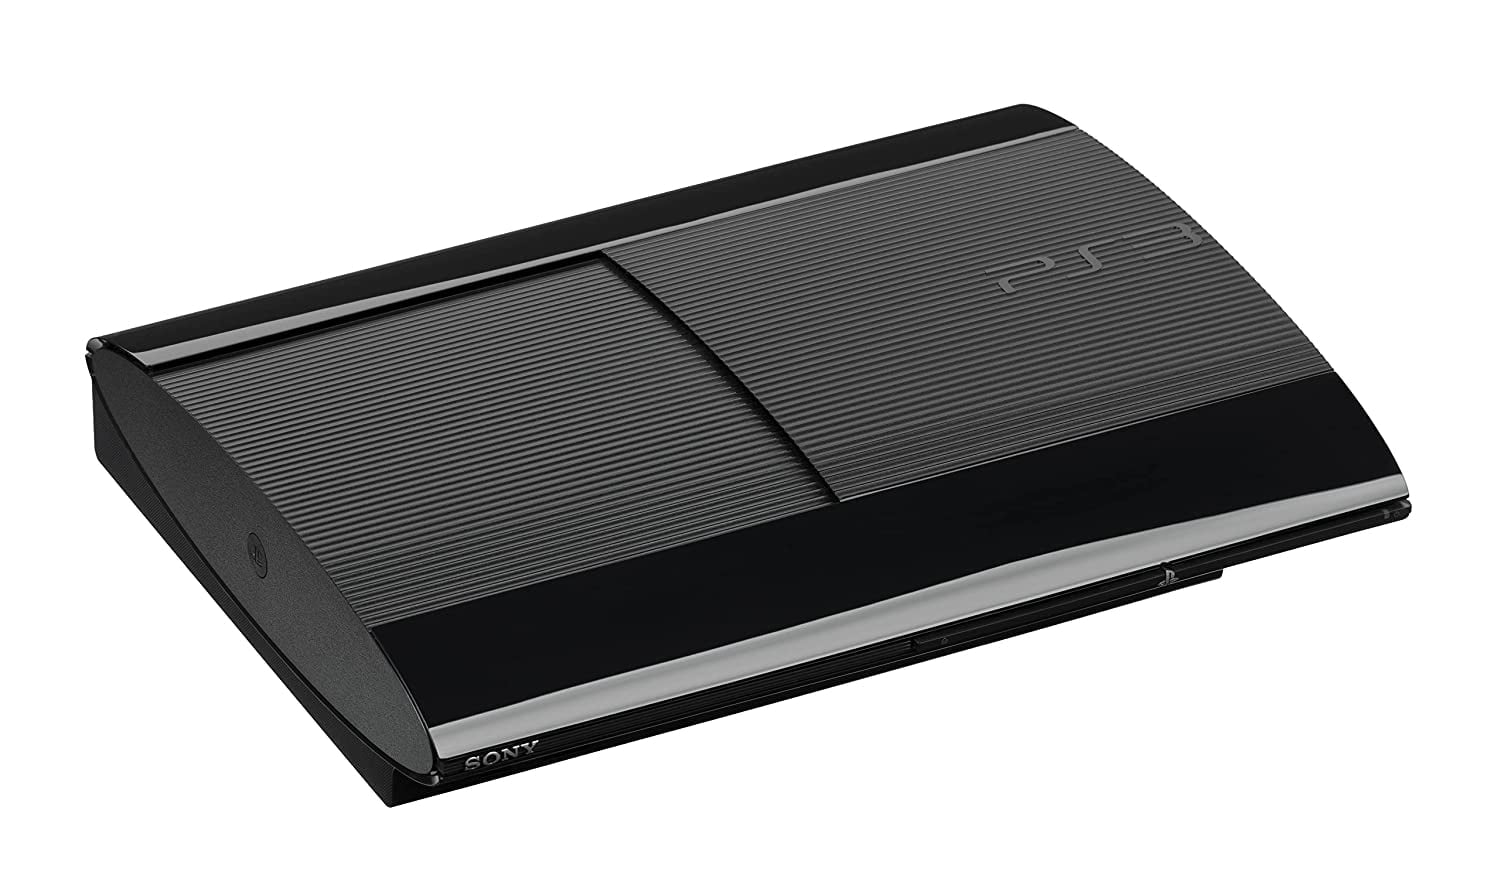 Playstation 3 Super Slim Top Loading 250GB Console - Black 4001B 42XXB